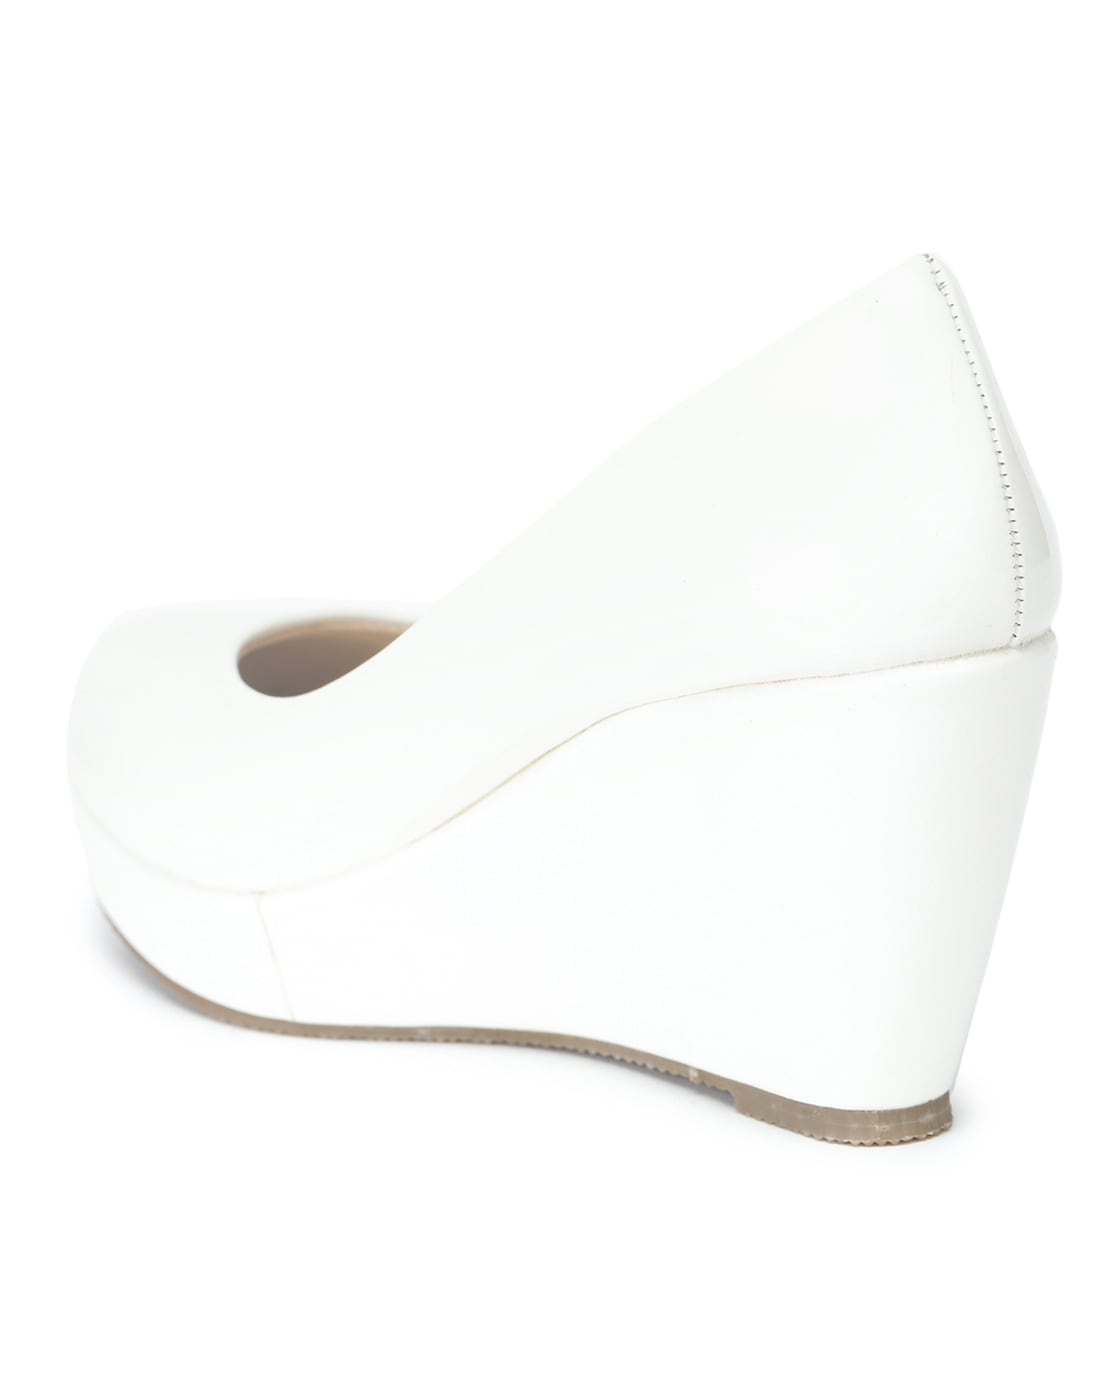 Pin by Stef on Wedges | High heels images, Peep toe wedge sandals, Hot heels